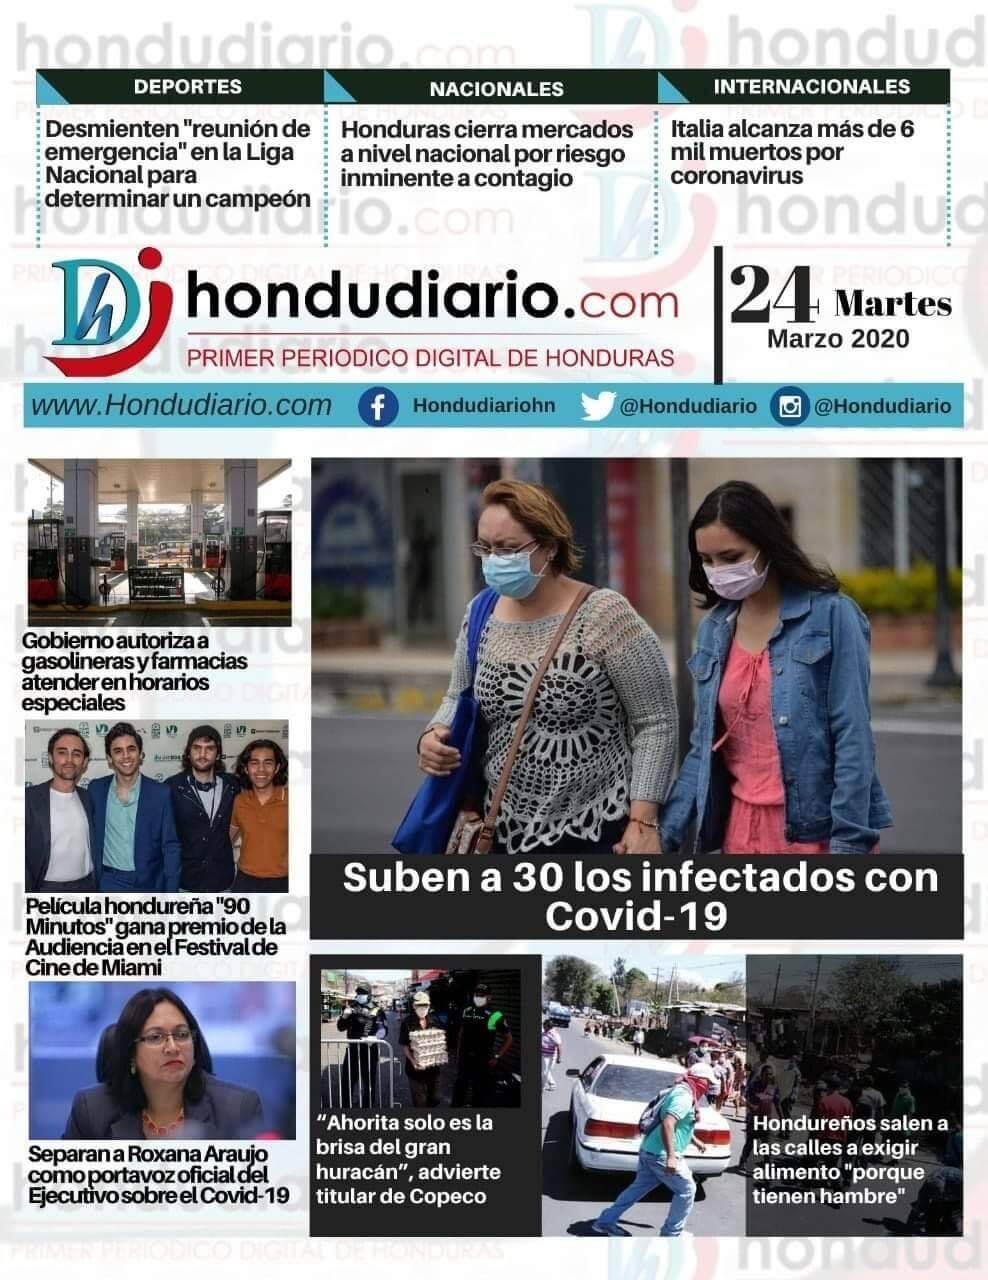 Honduras newspapers 4 Hondudiario